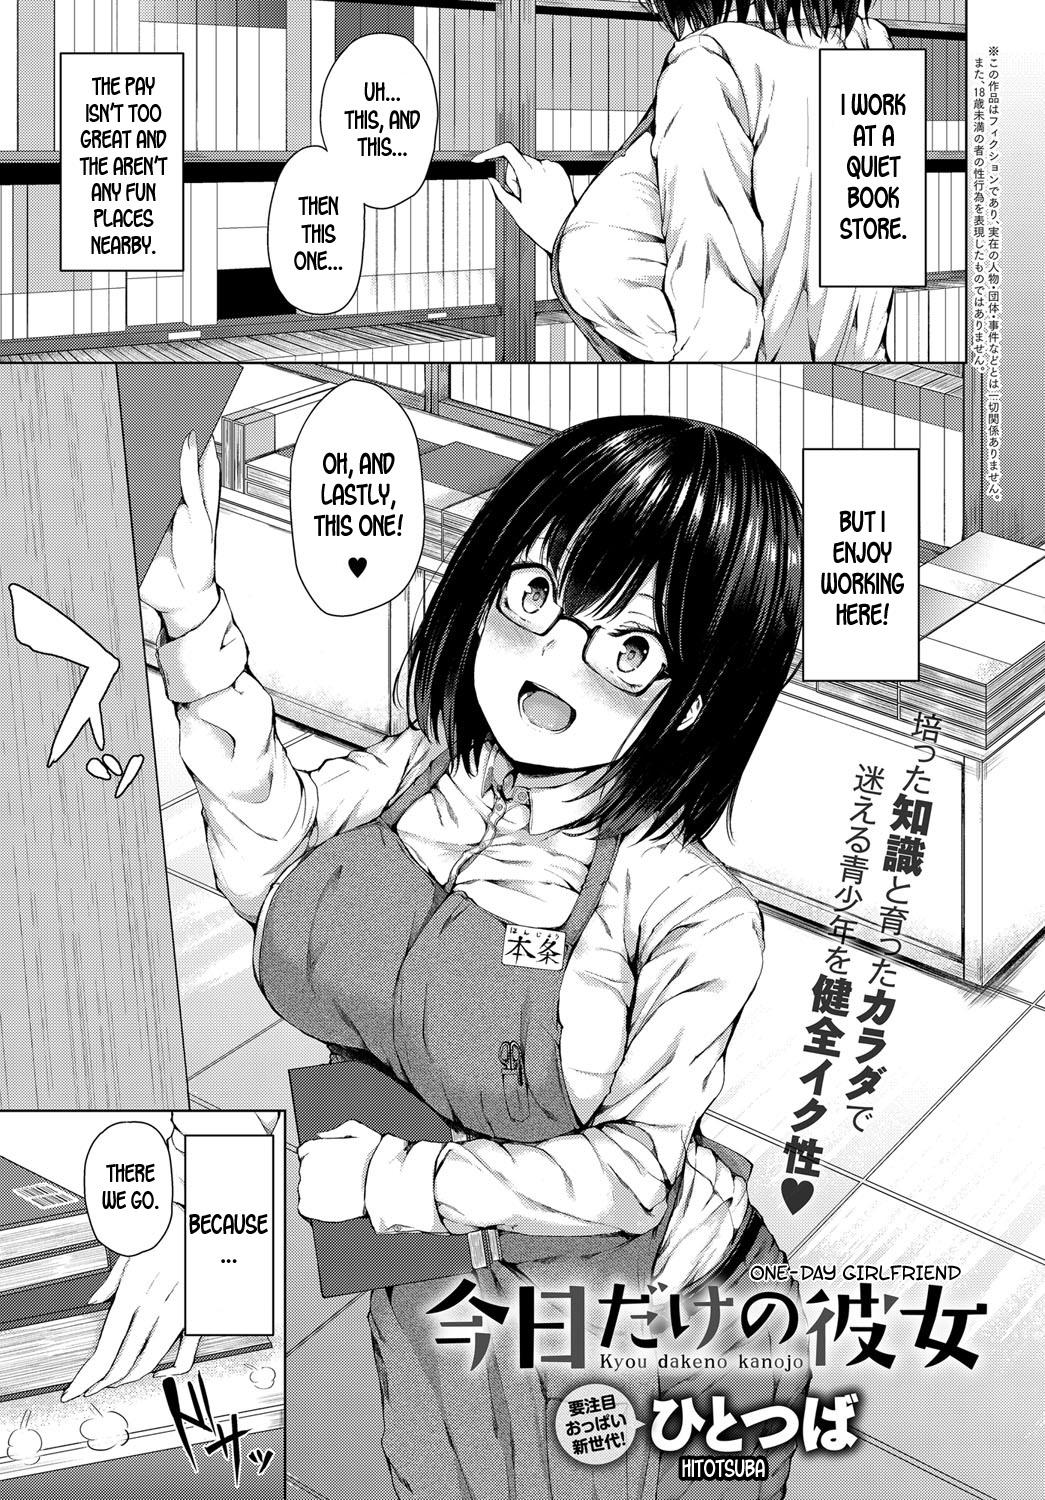 Petite Kyou dakeno kanojo | One-Day Girlfriend Panty - Page 1